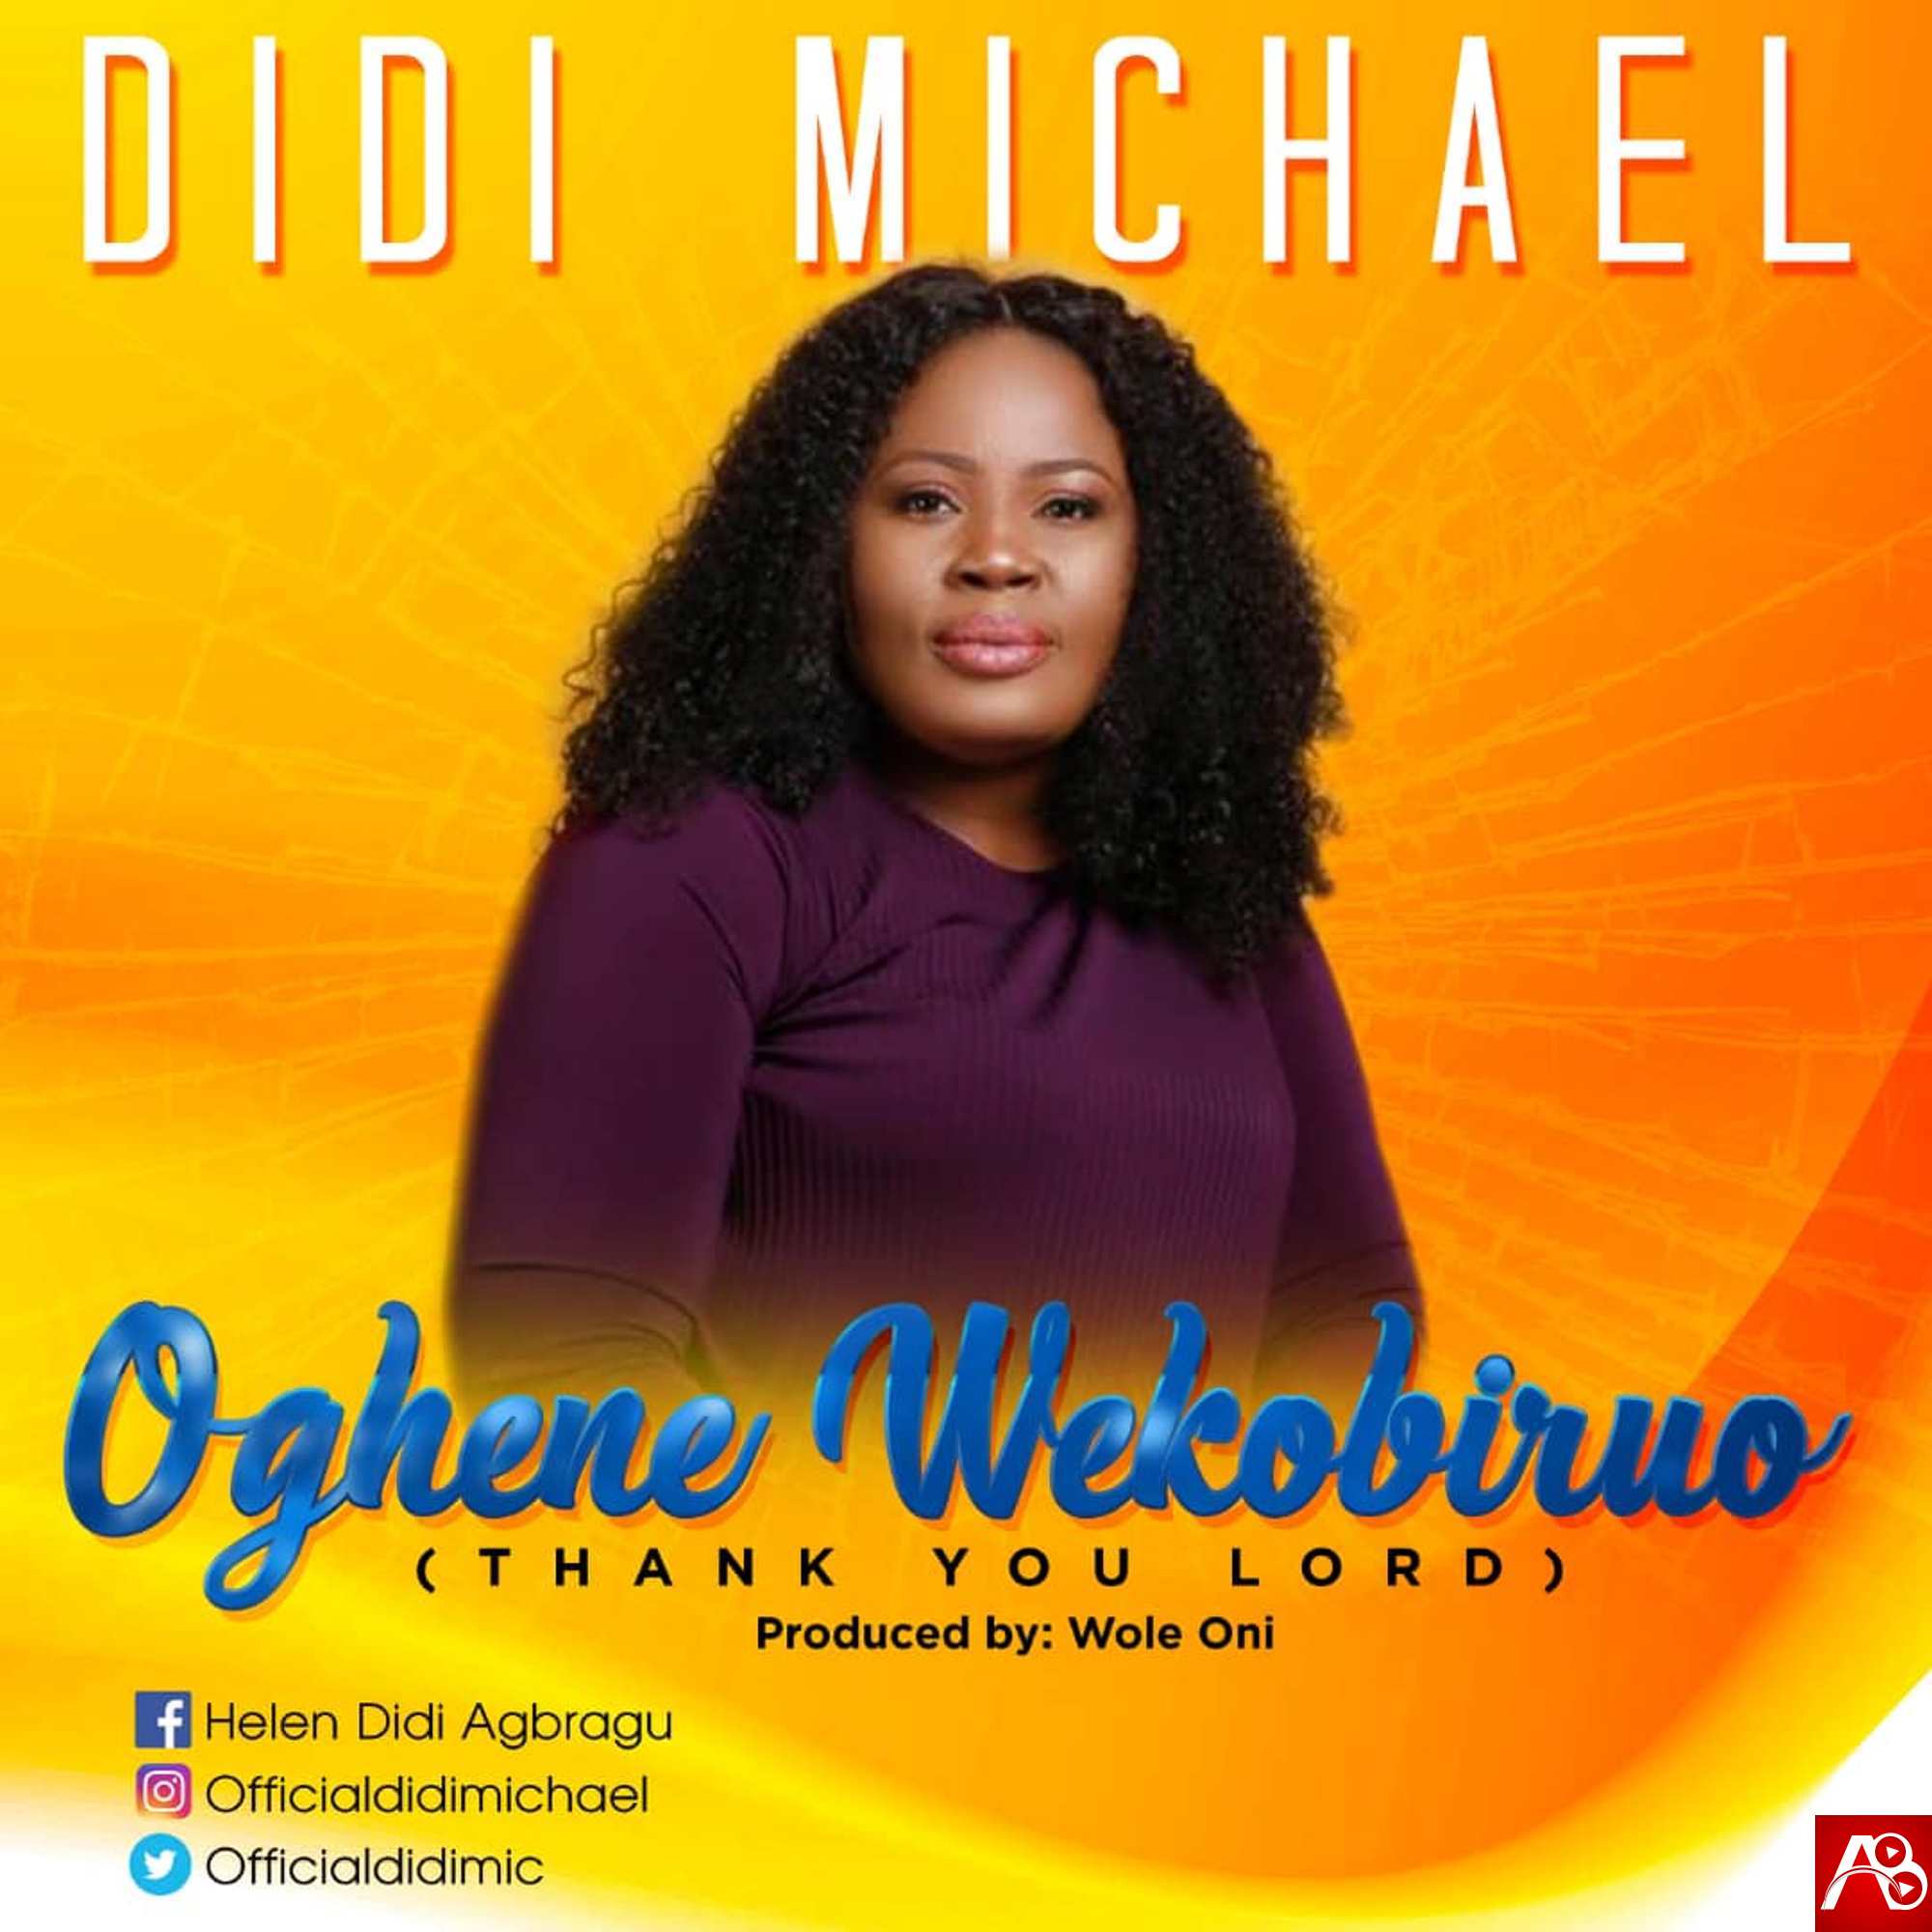 Didi Michael Oghene Wekobiruo